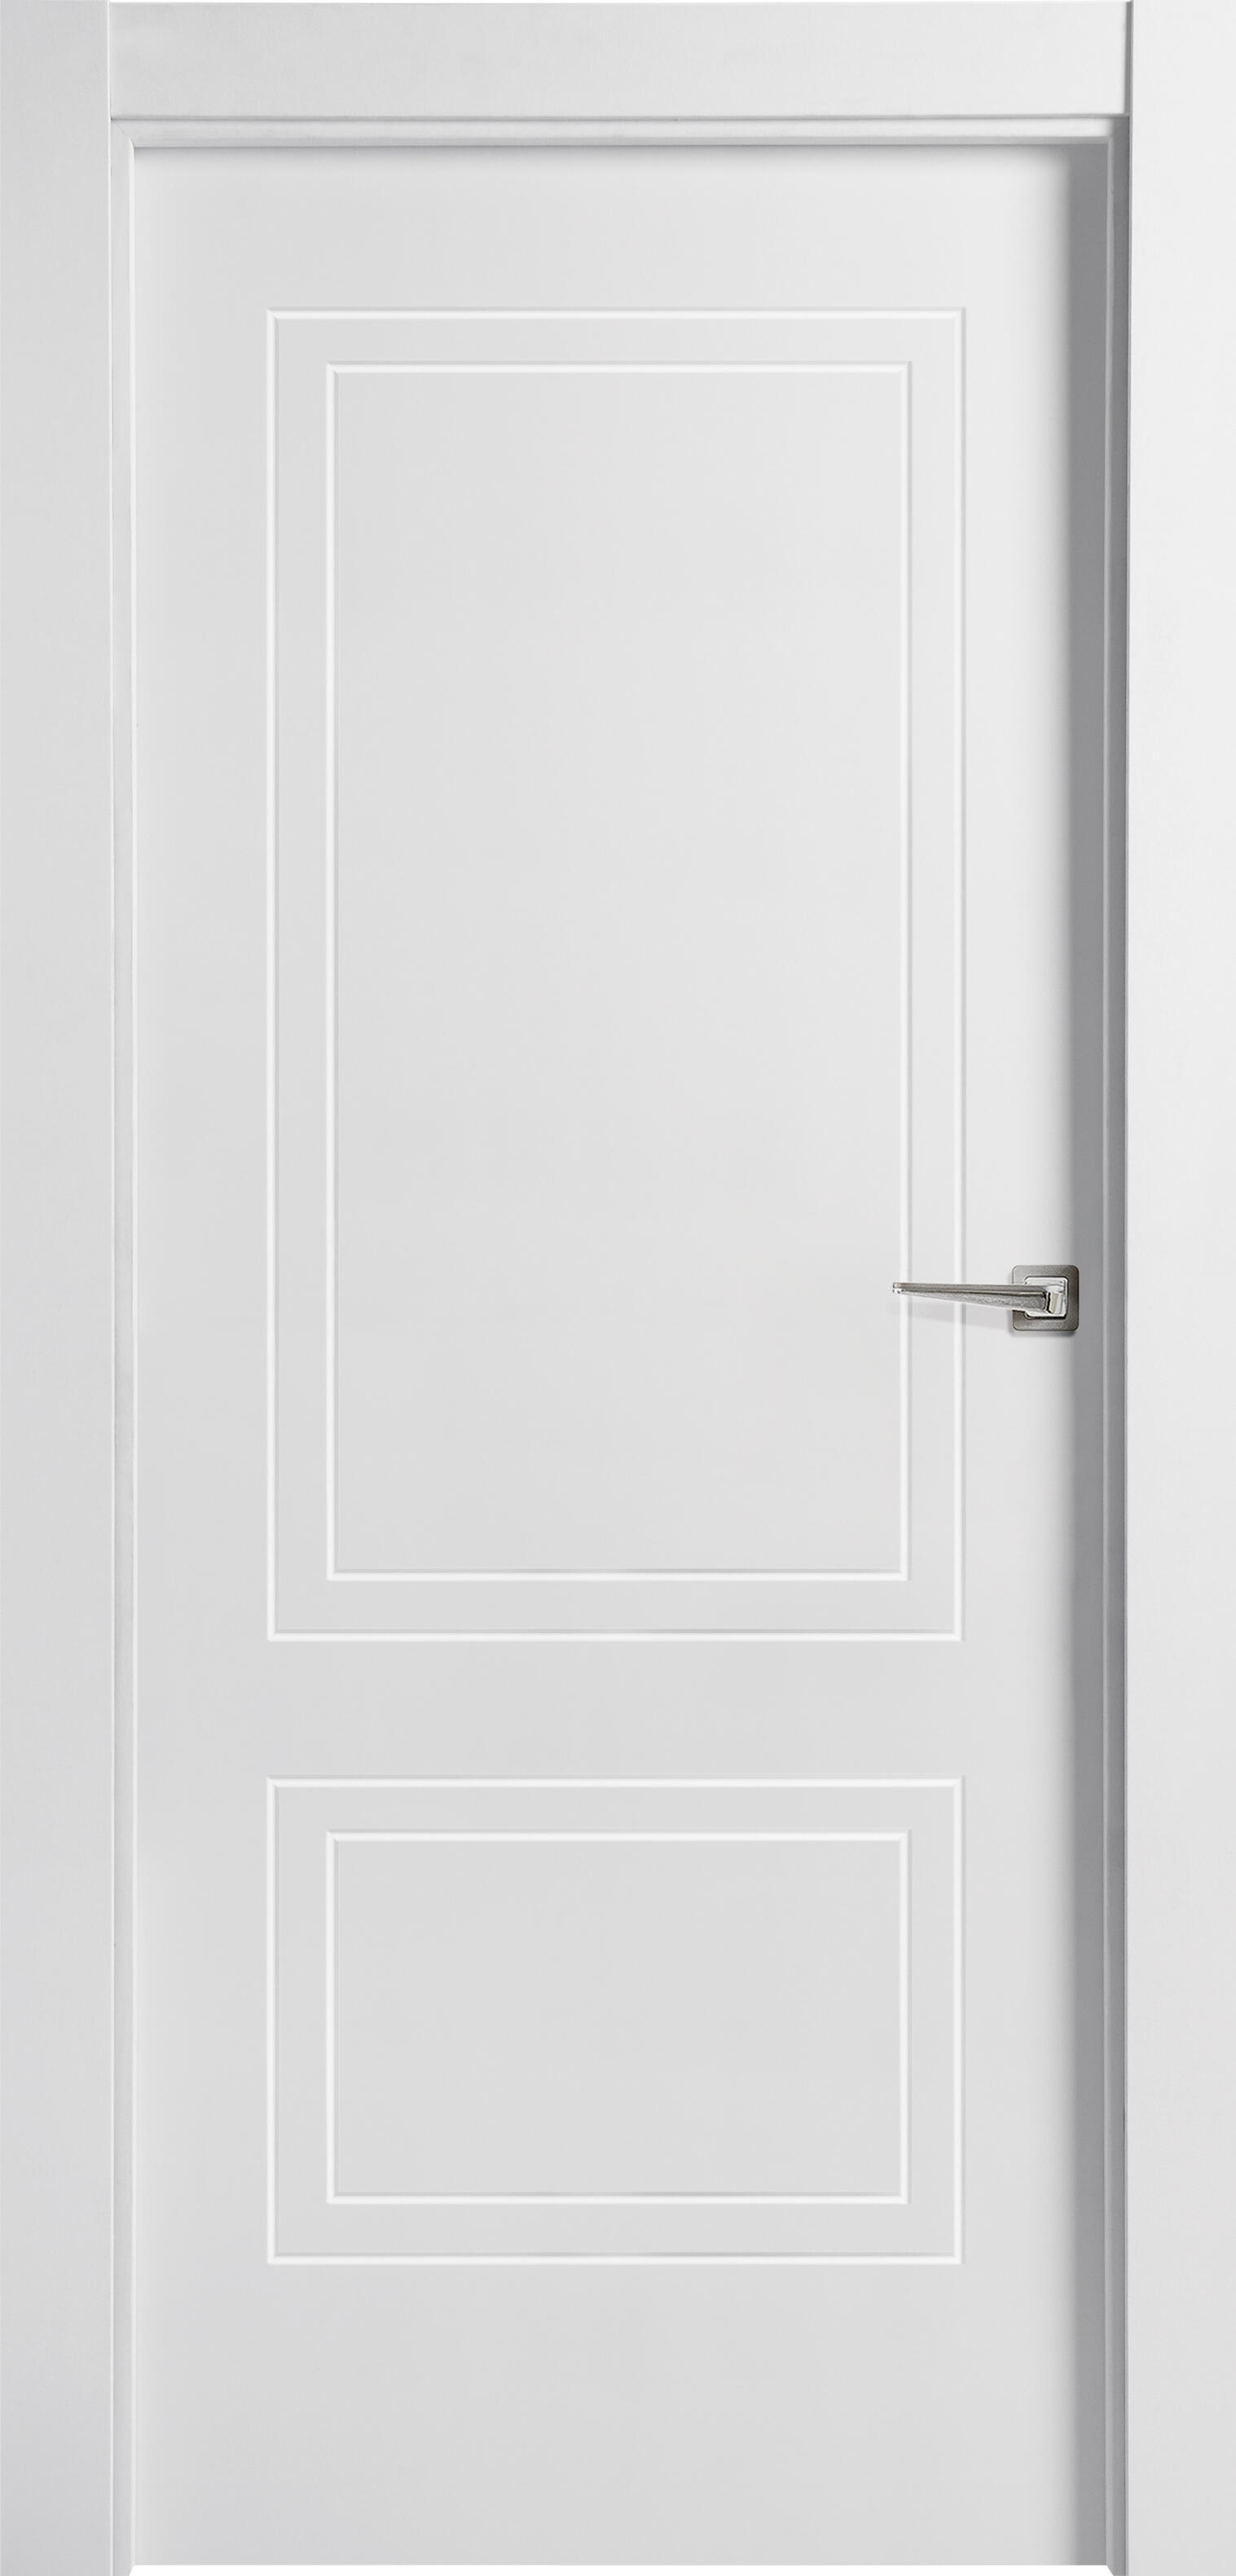 Puerta boston blanco de apertura izquierda de 9x 62.5 cm